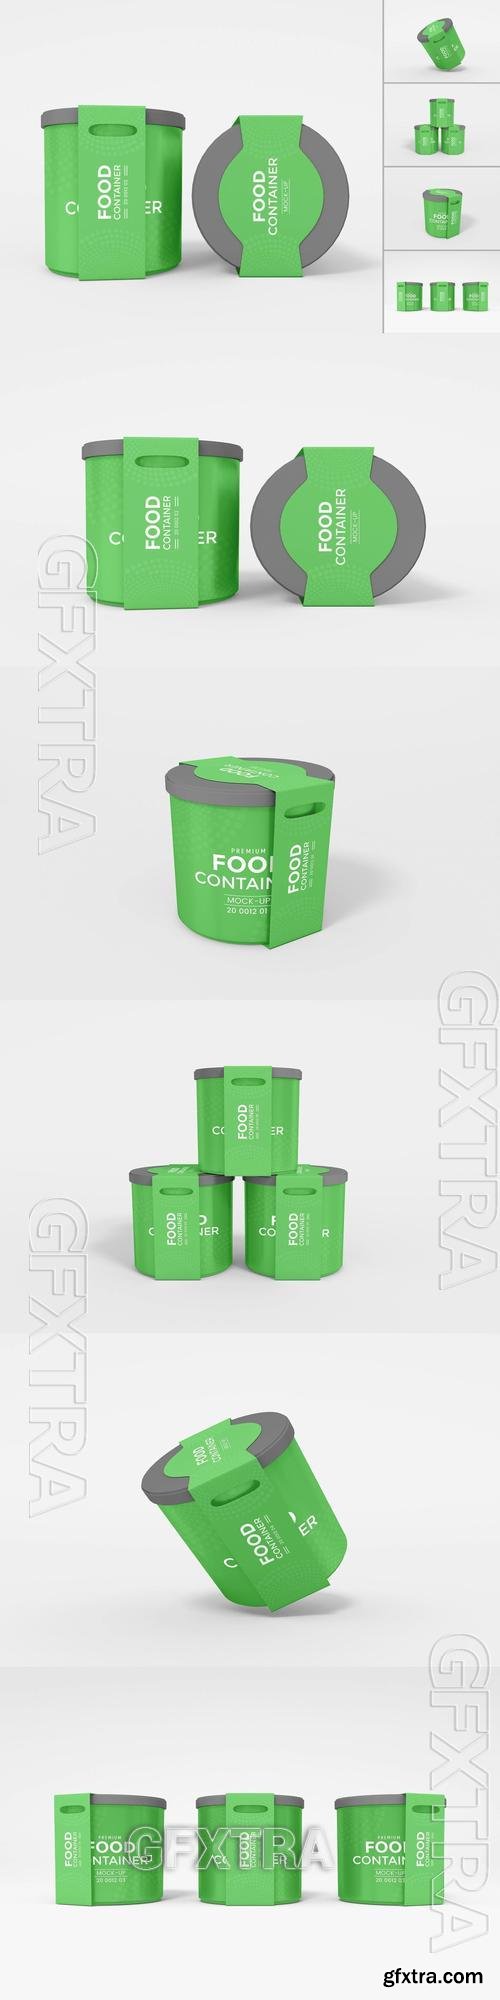 Food Container Sleeve Packaging Mockup Set KLQTEVW